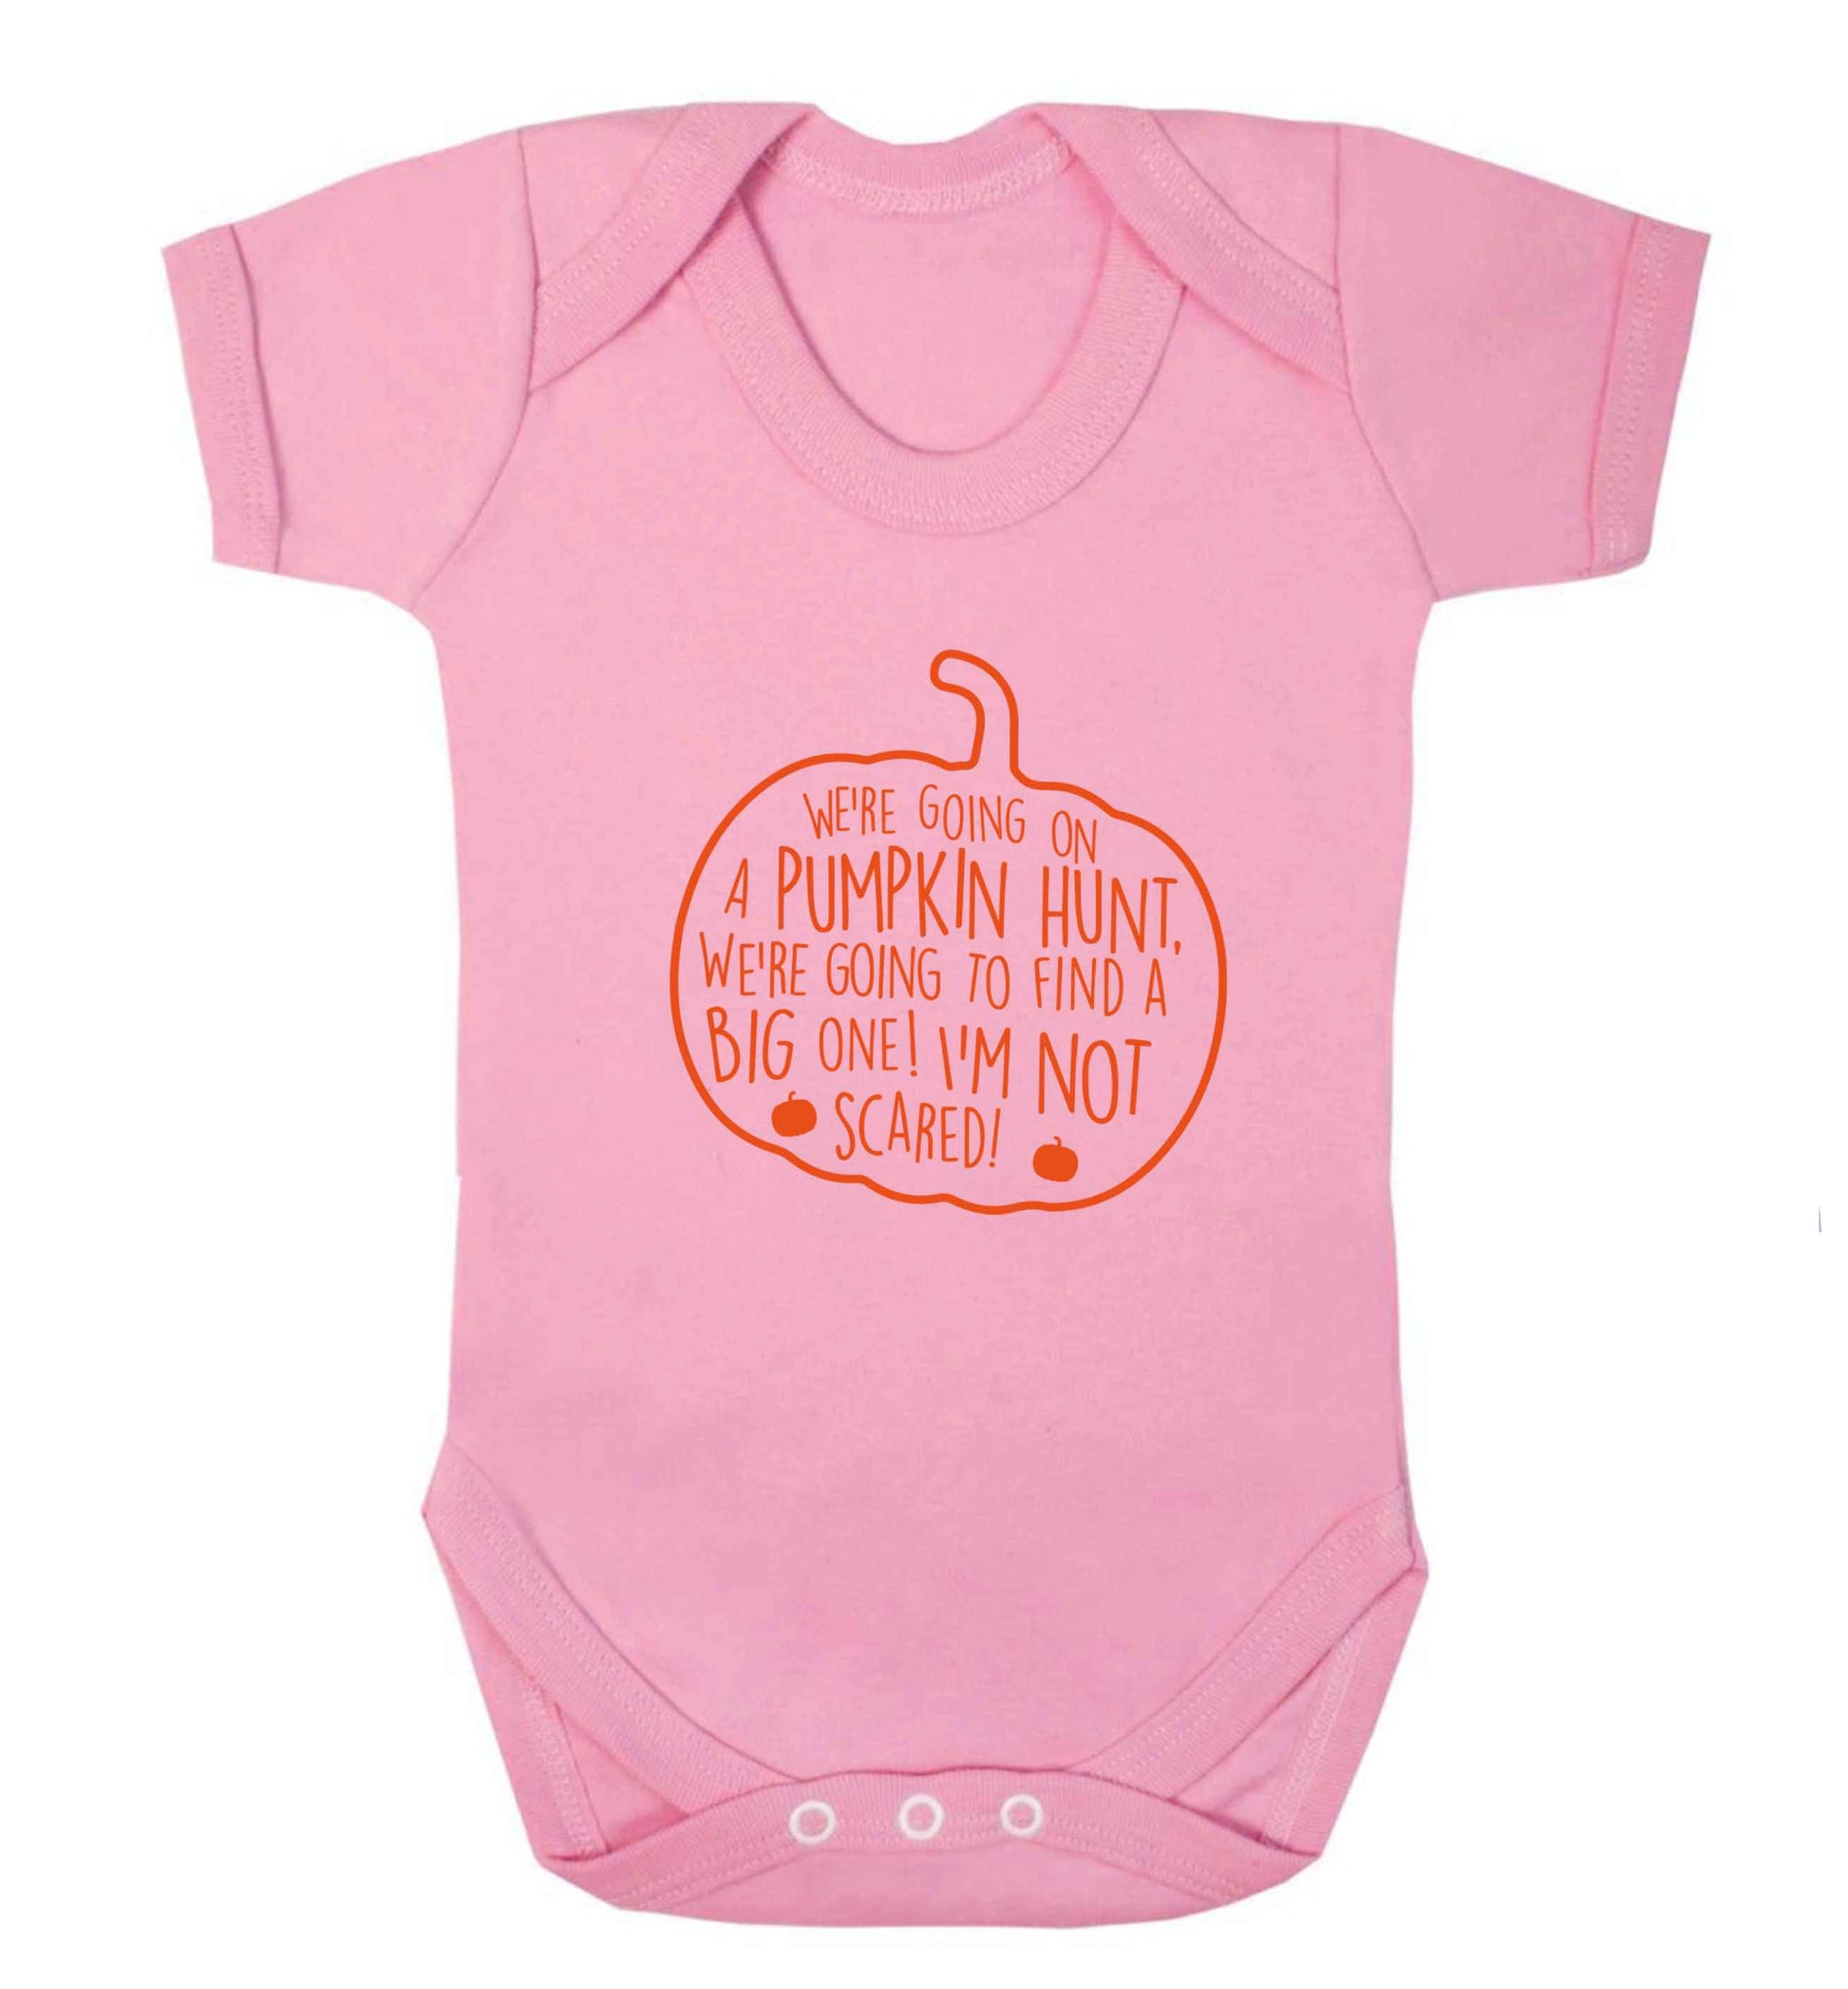 We're going on a pumpkin hunt baby vest pale pink 18-24 months